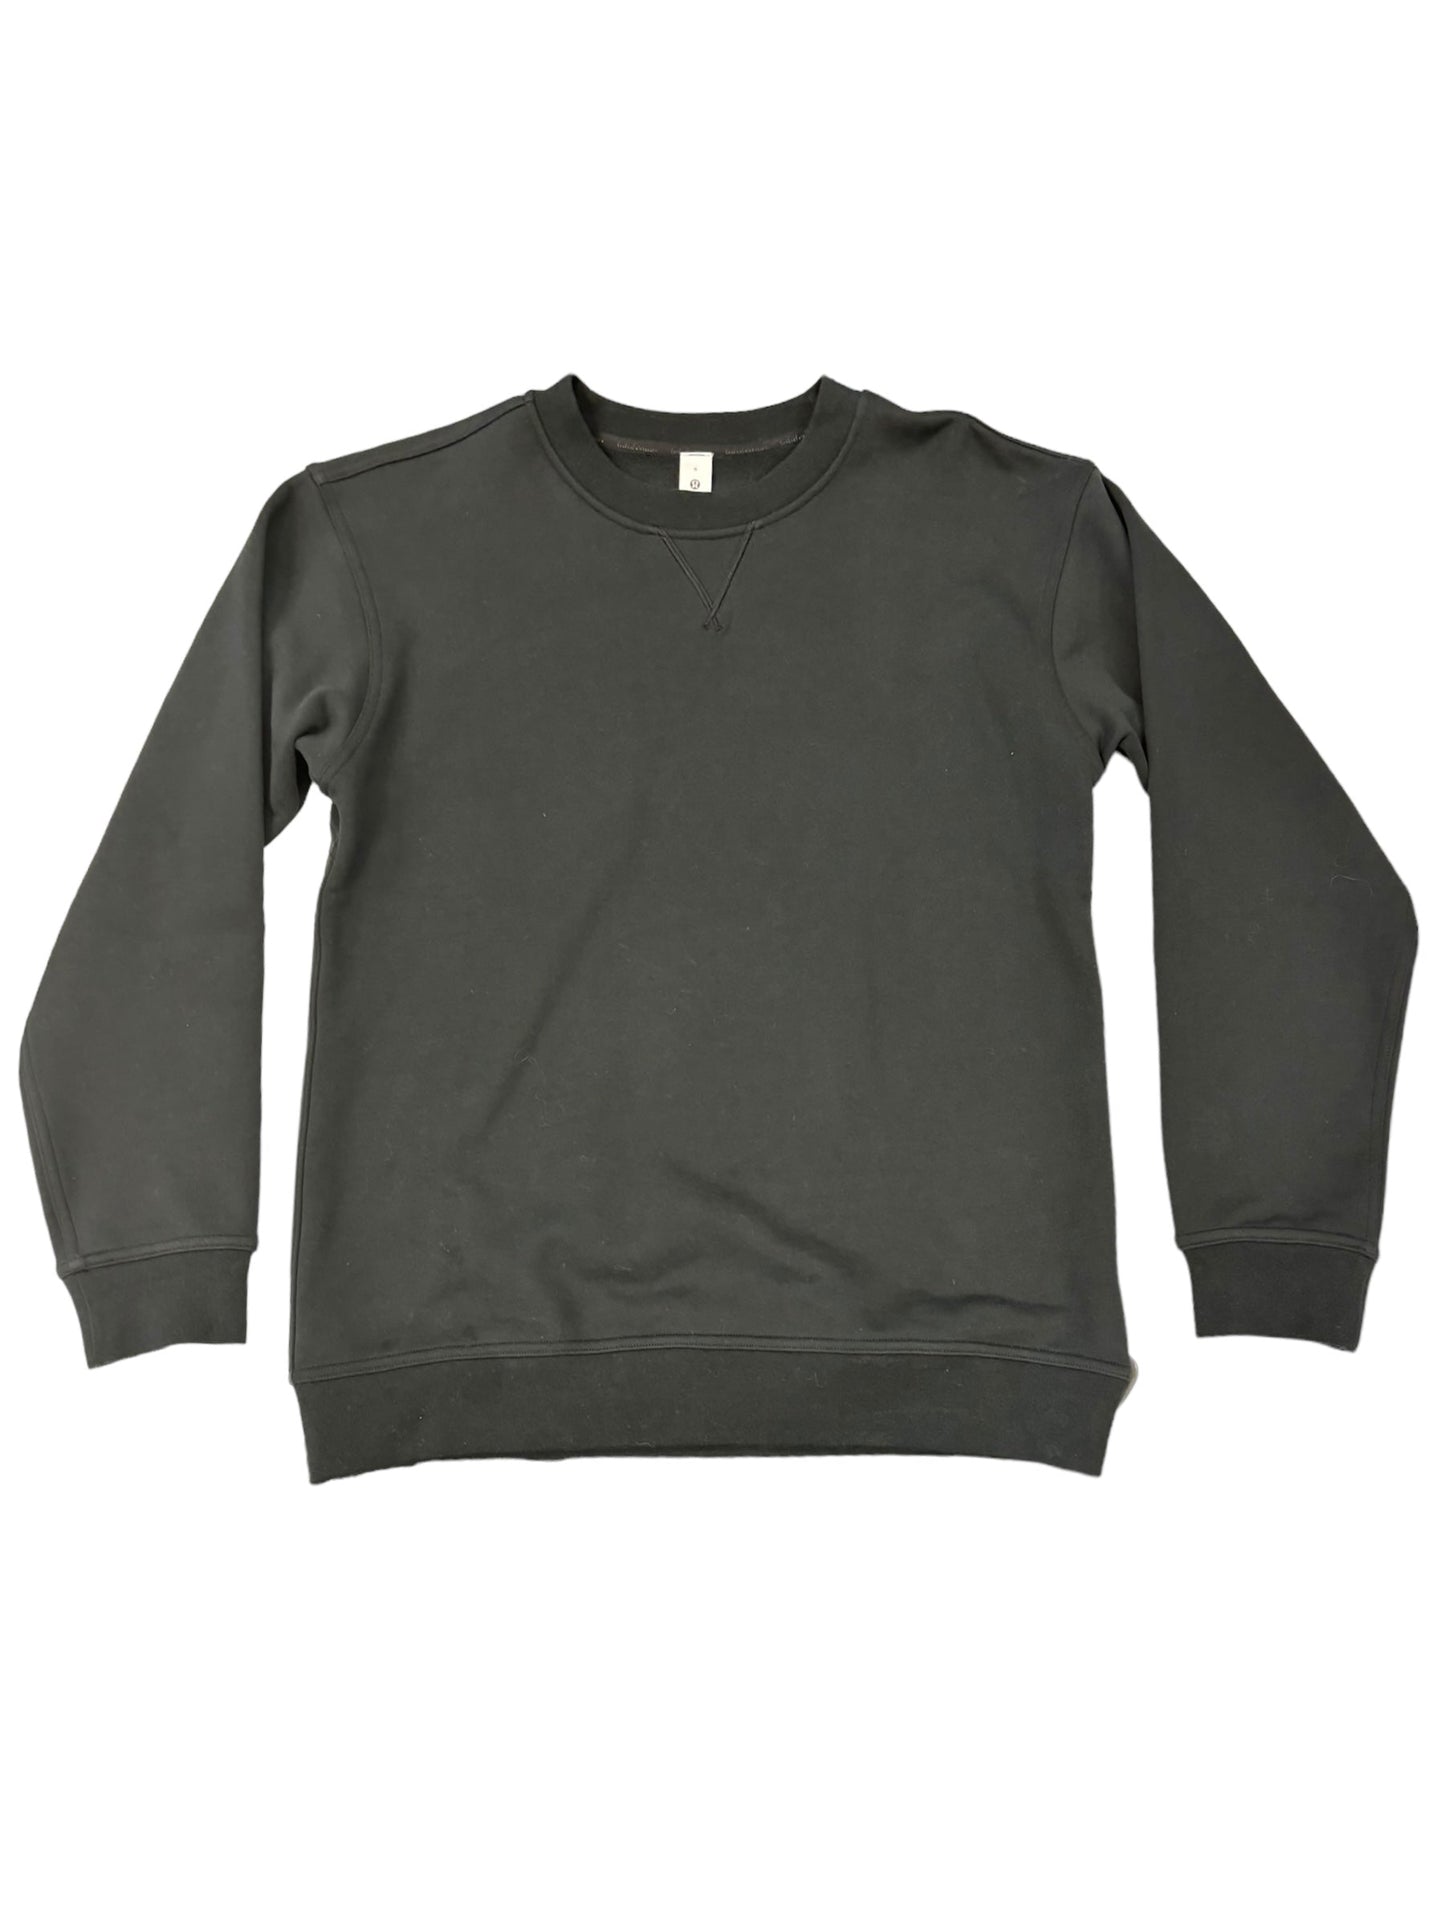 Black Sweatshirt Crewneck Lululemon, Size M